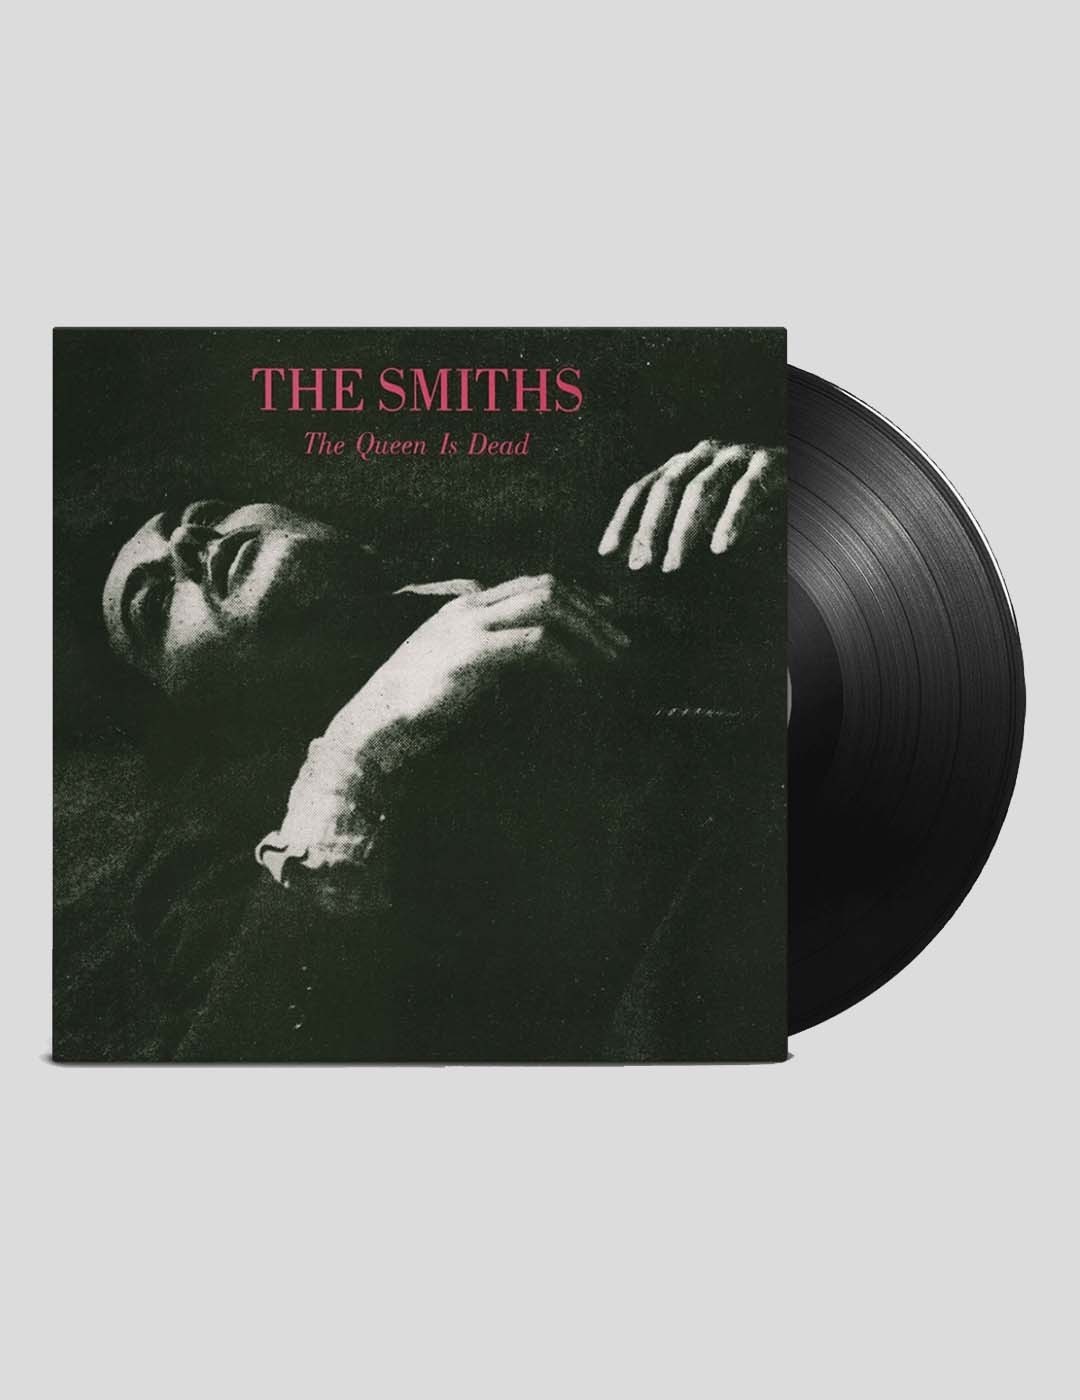 VINILO THE SMITHS - THE QUEEN IS DEAD LP VINYL